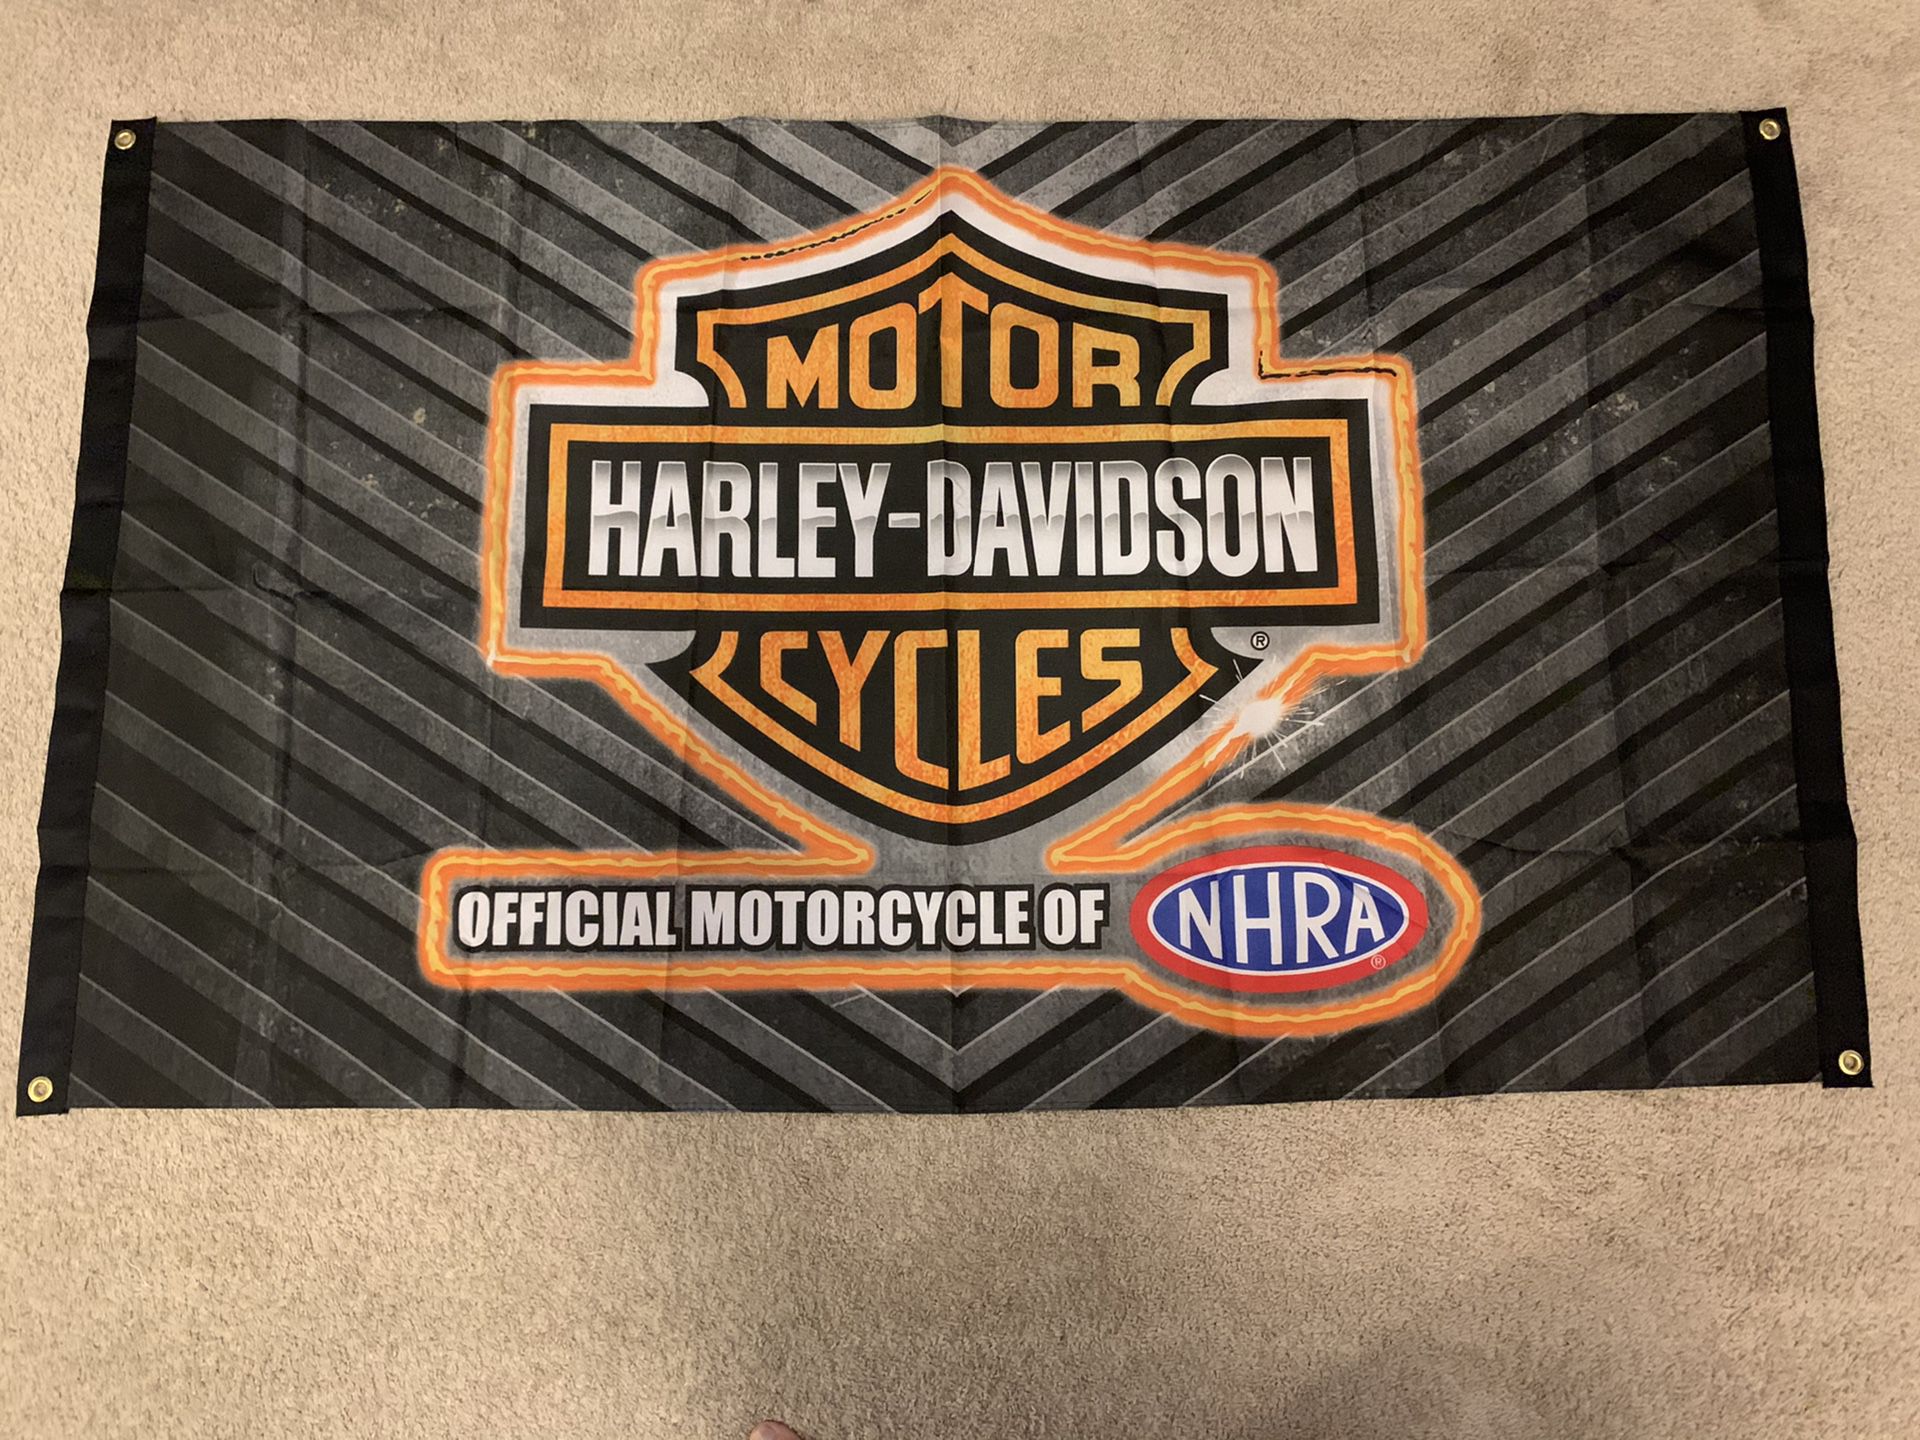 Harley Davidson banner